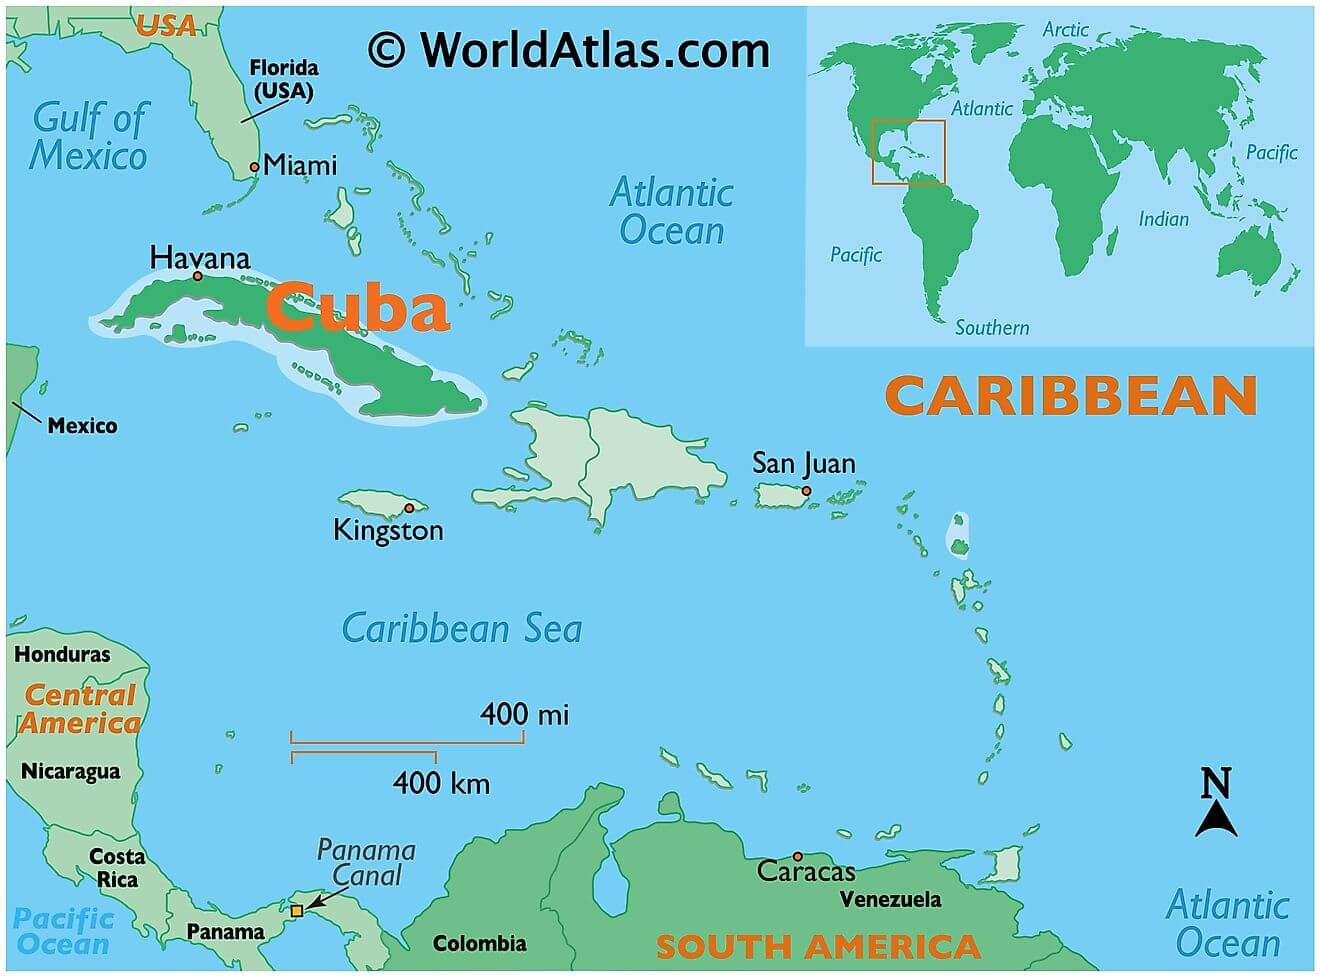 Where is Cuba?